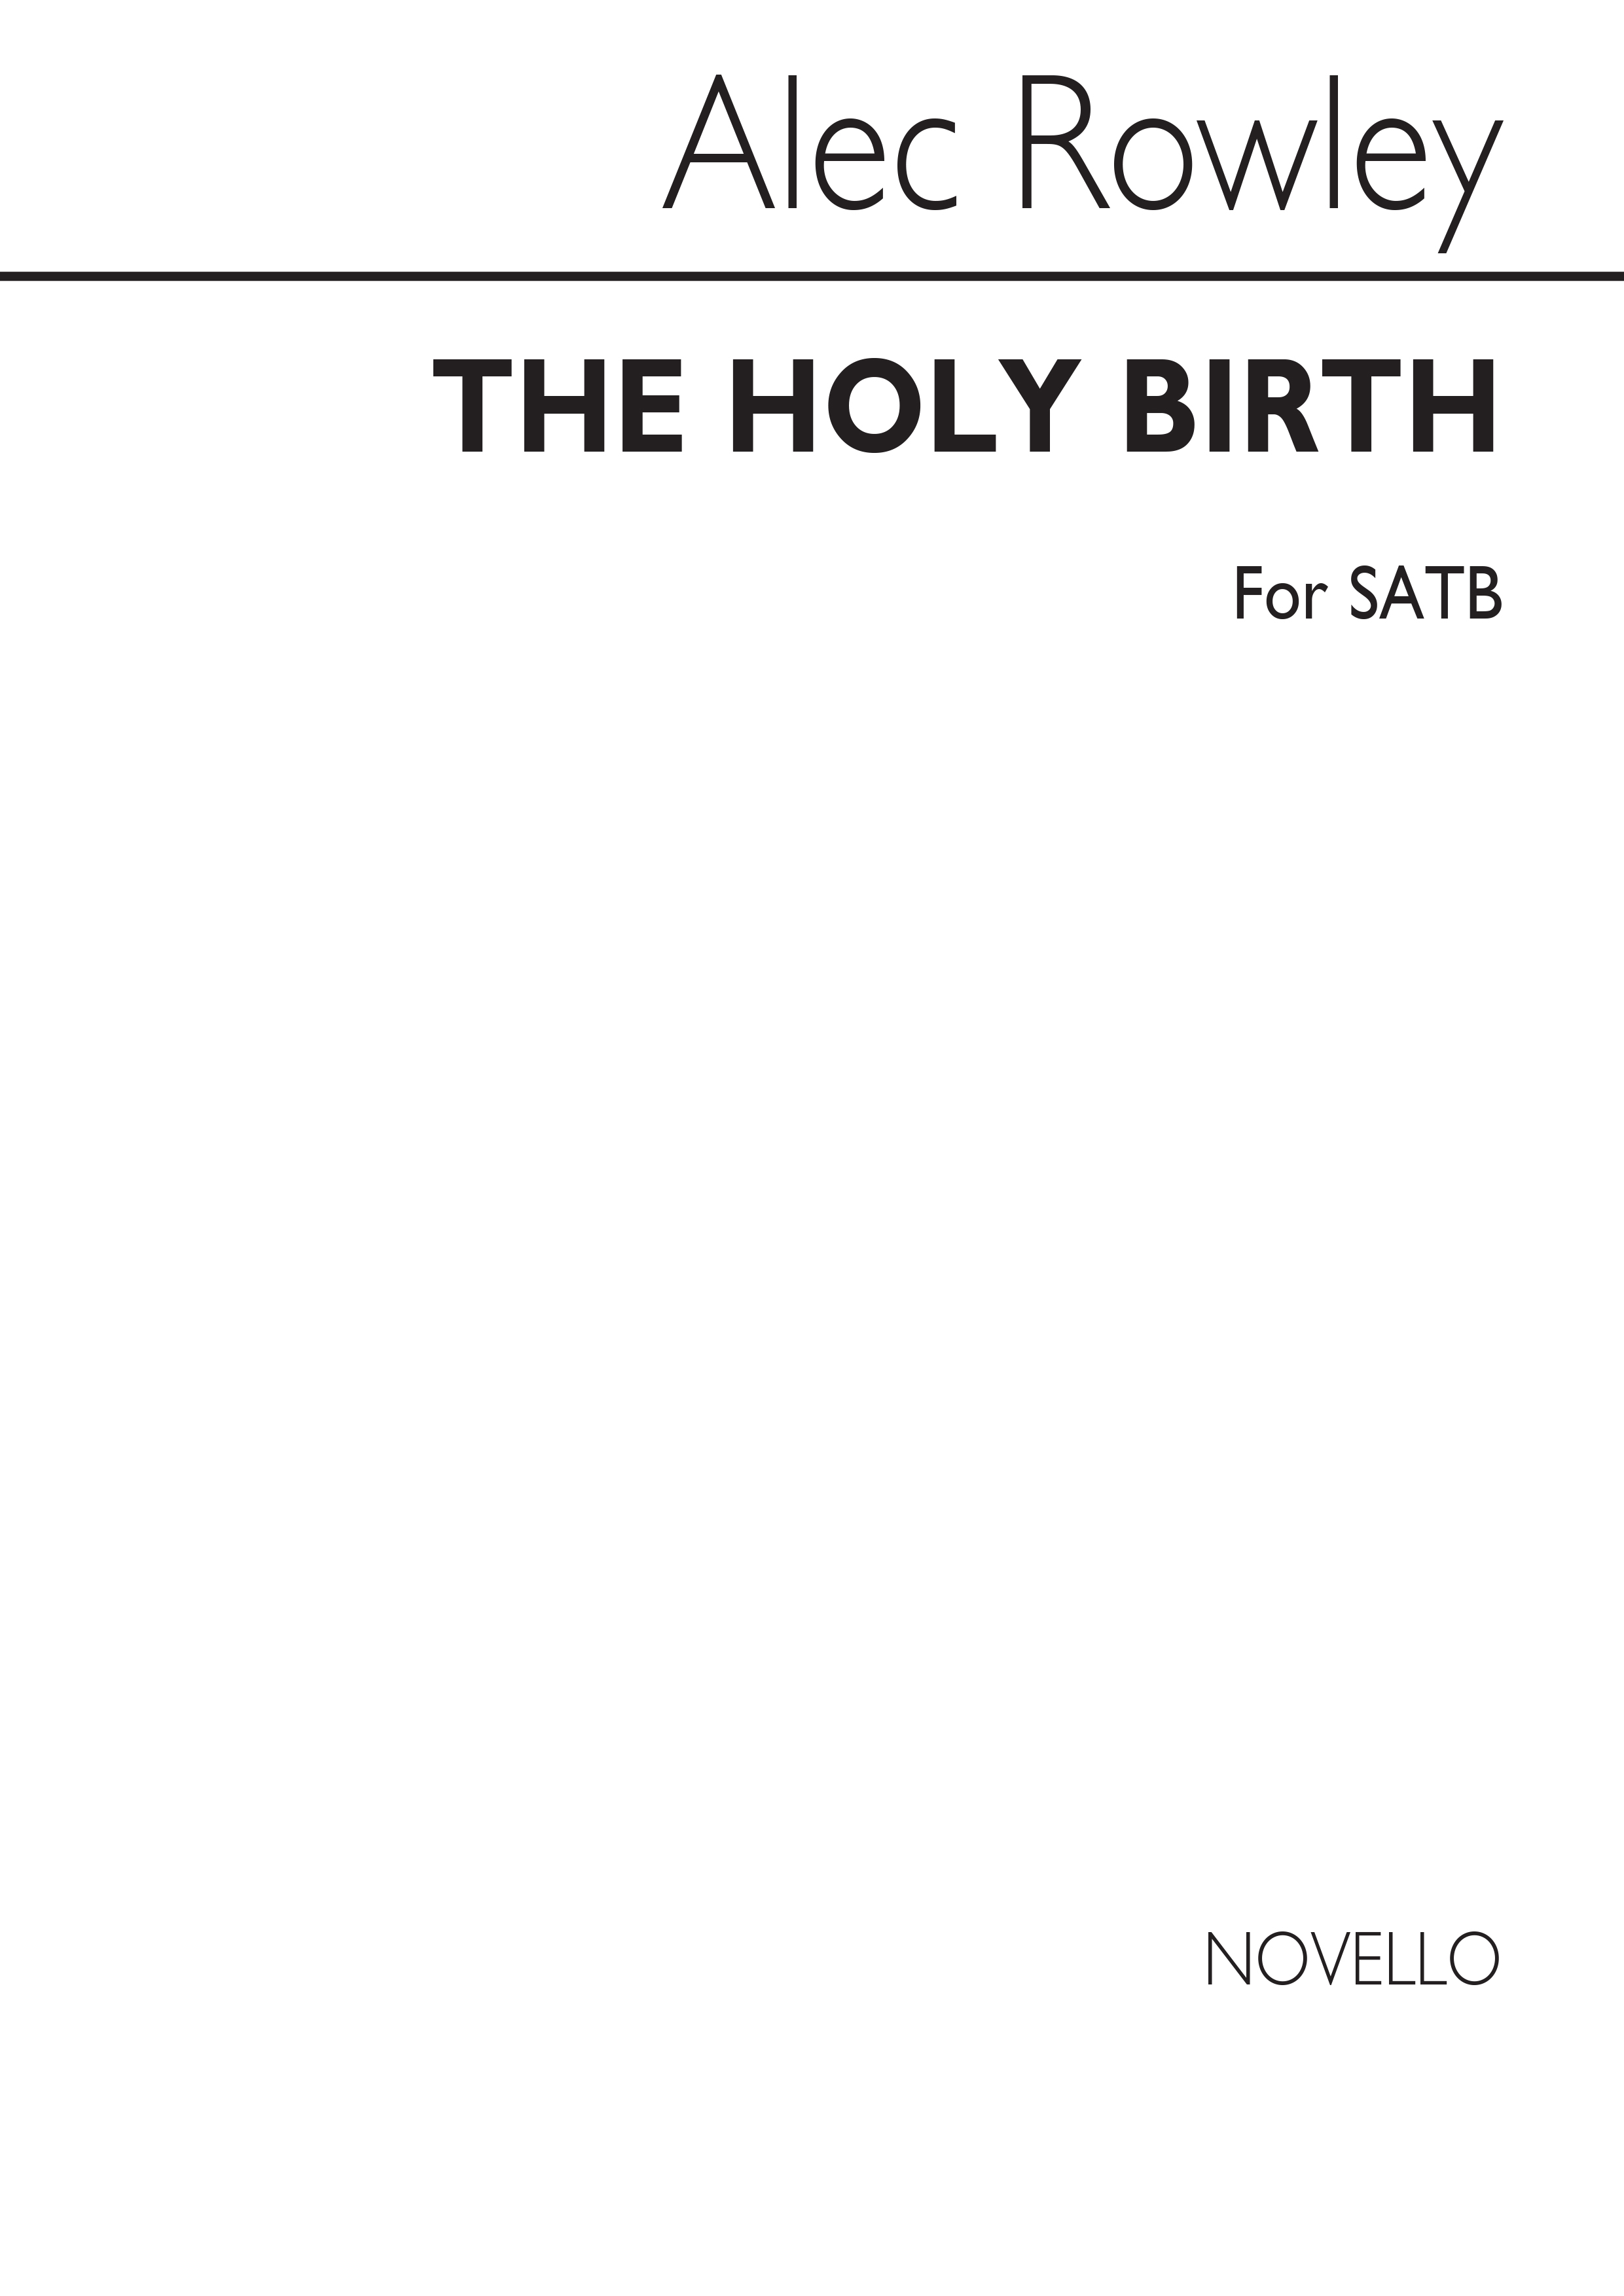 Rowley: The Holy Birth for SATB Chorus